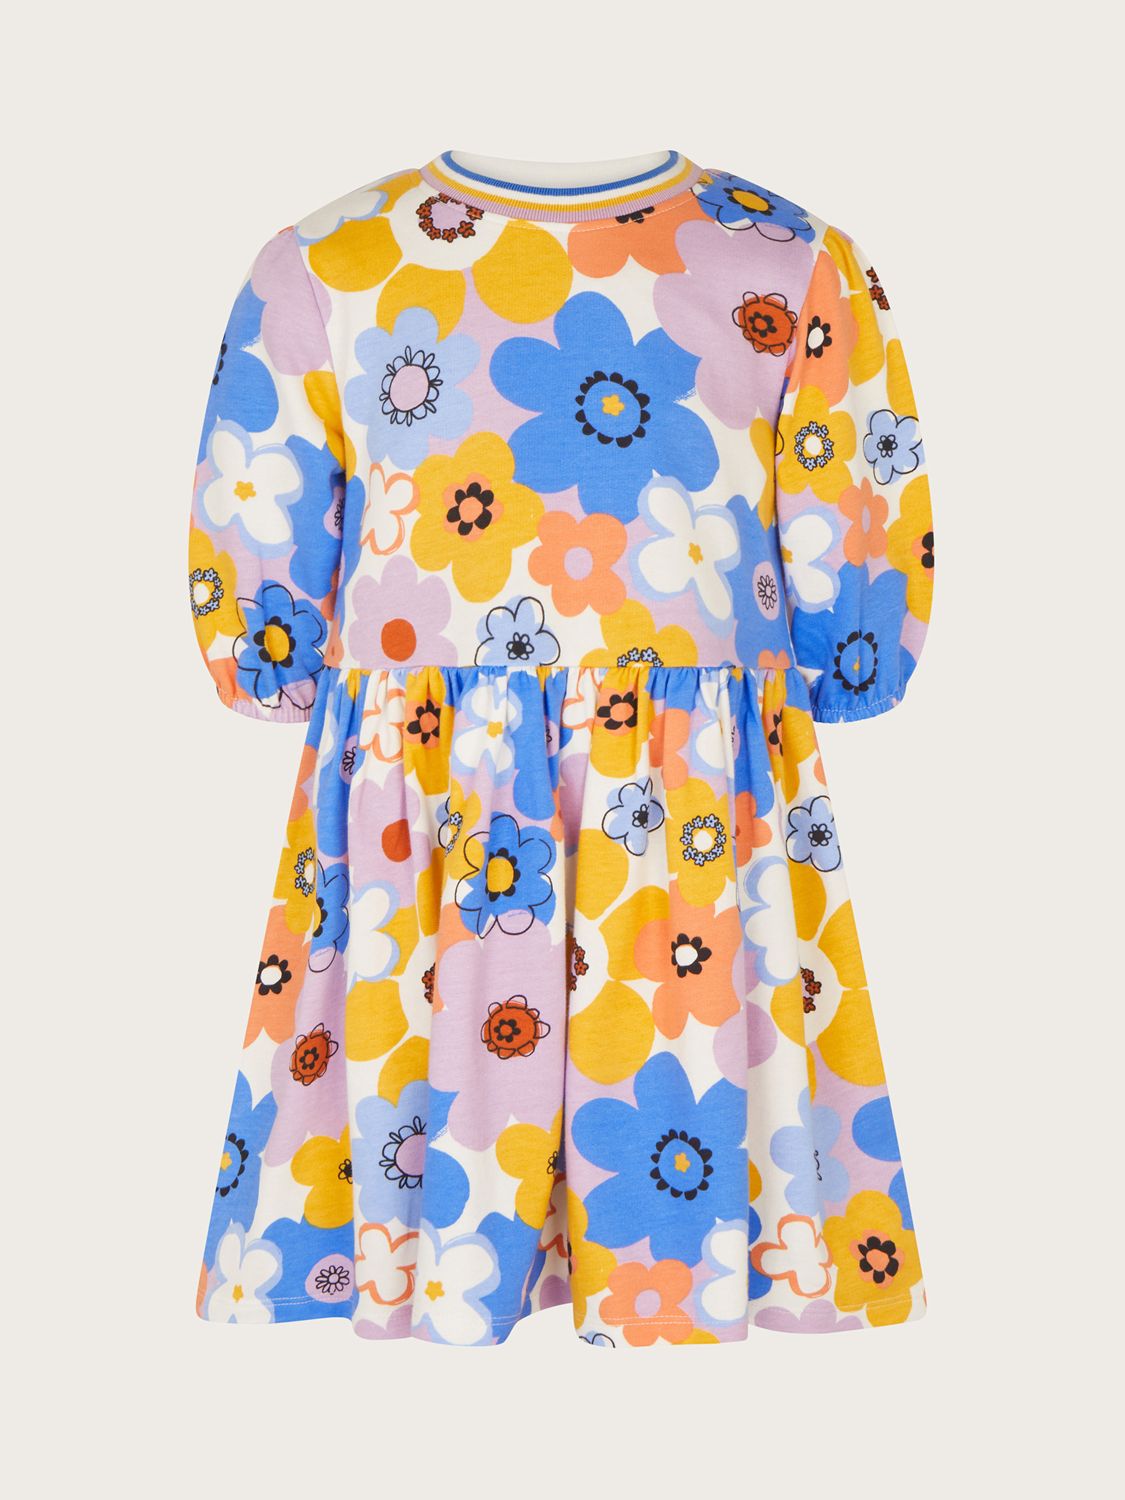 Monsoon Kids' Retro Floral Print Dress, Multi, 3-4 years